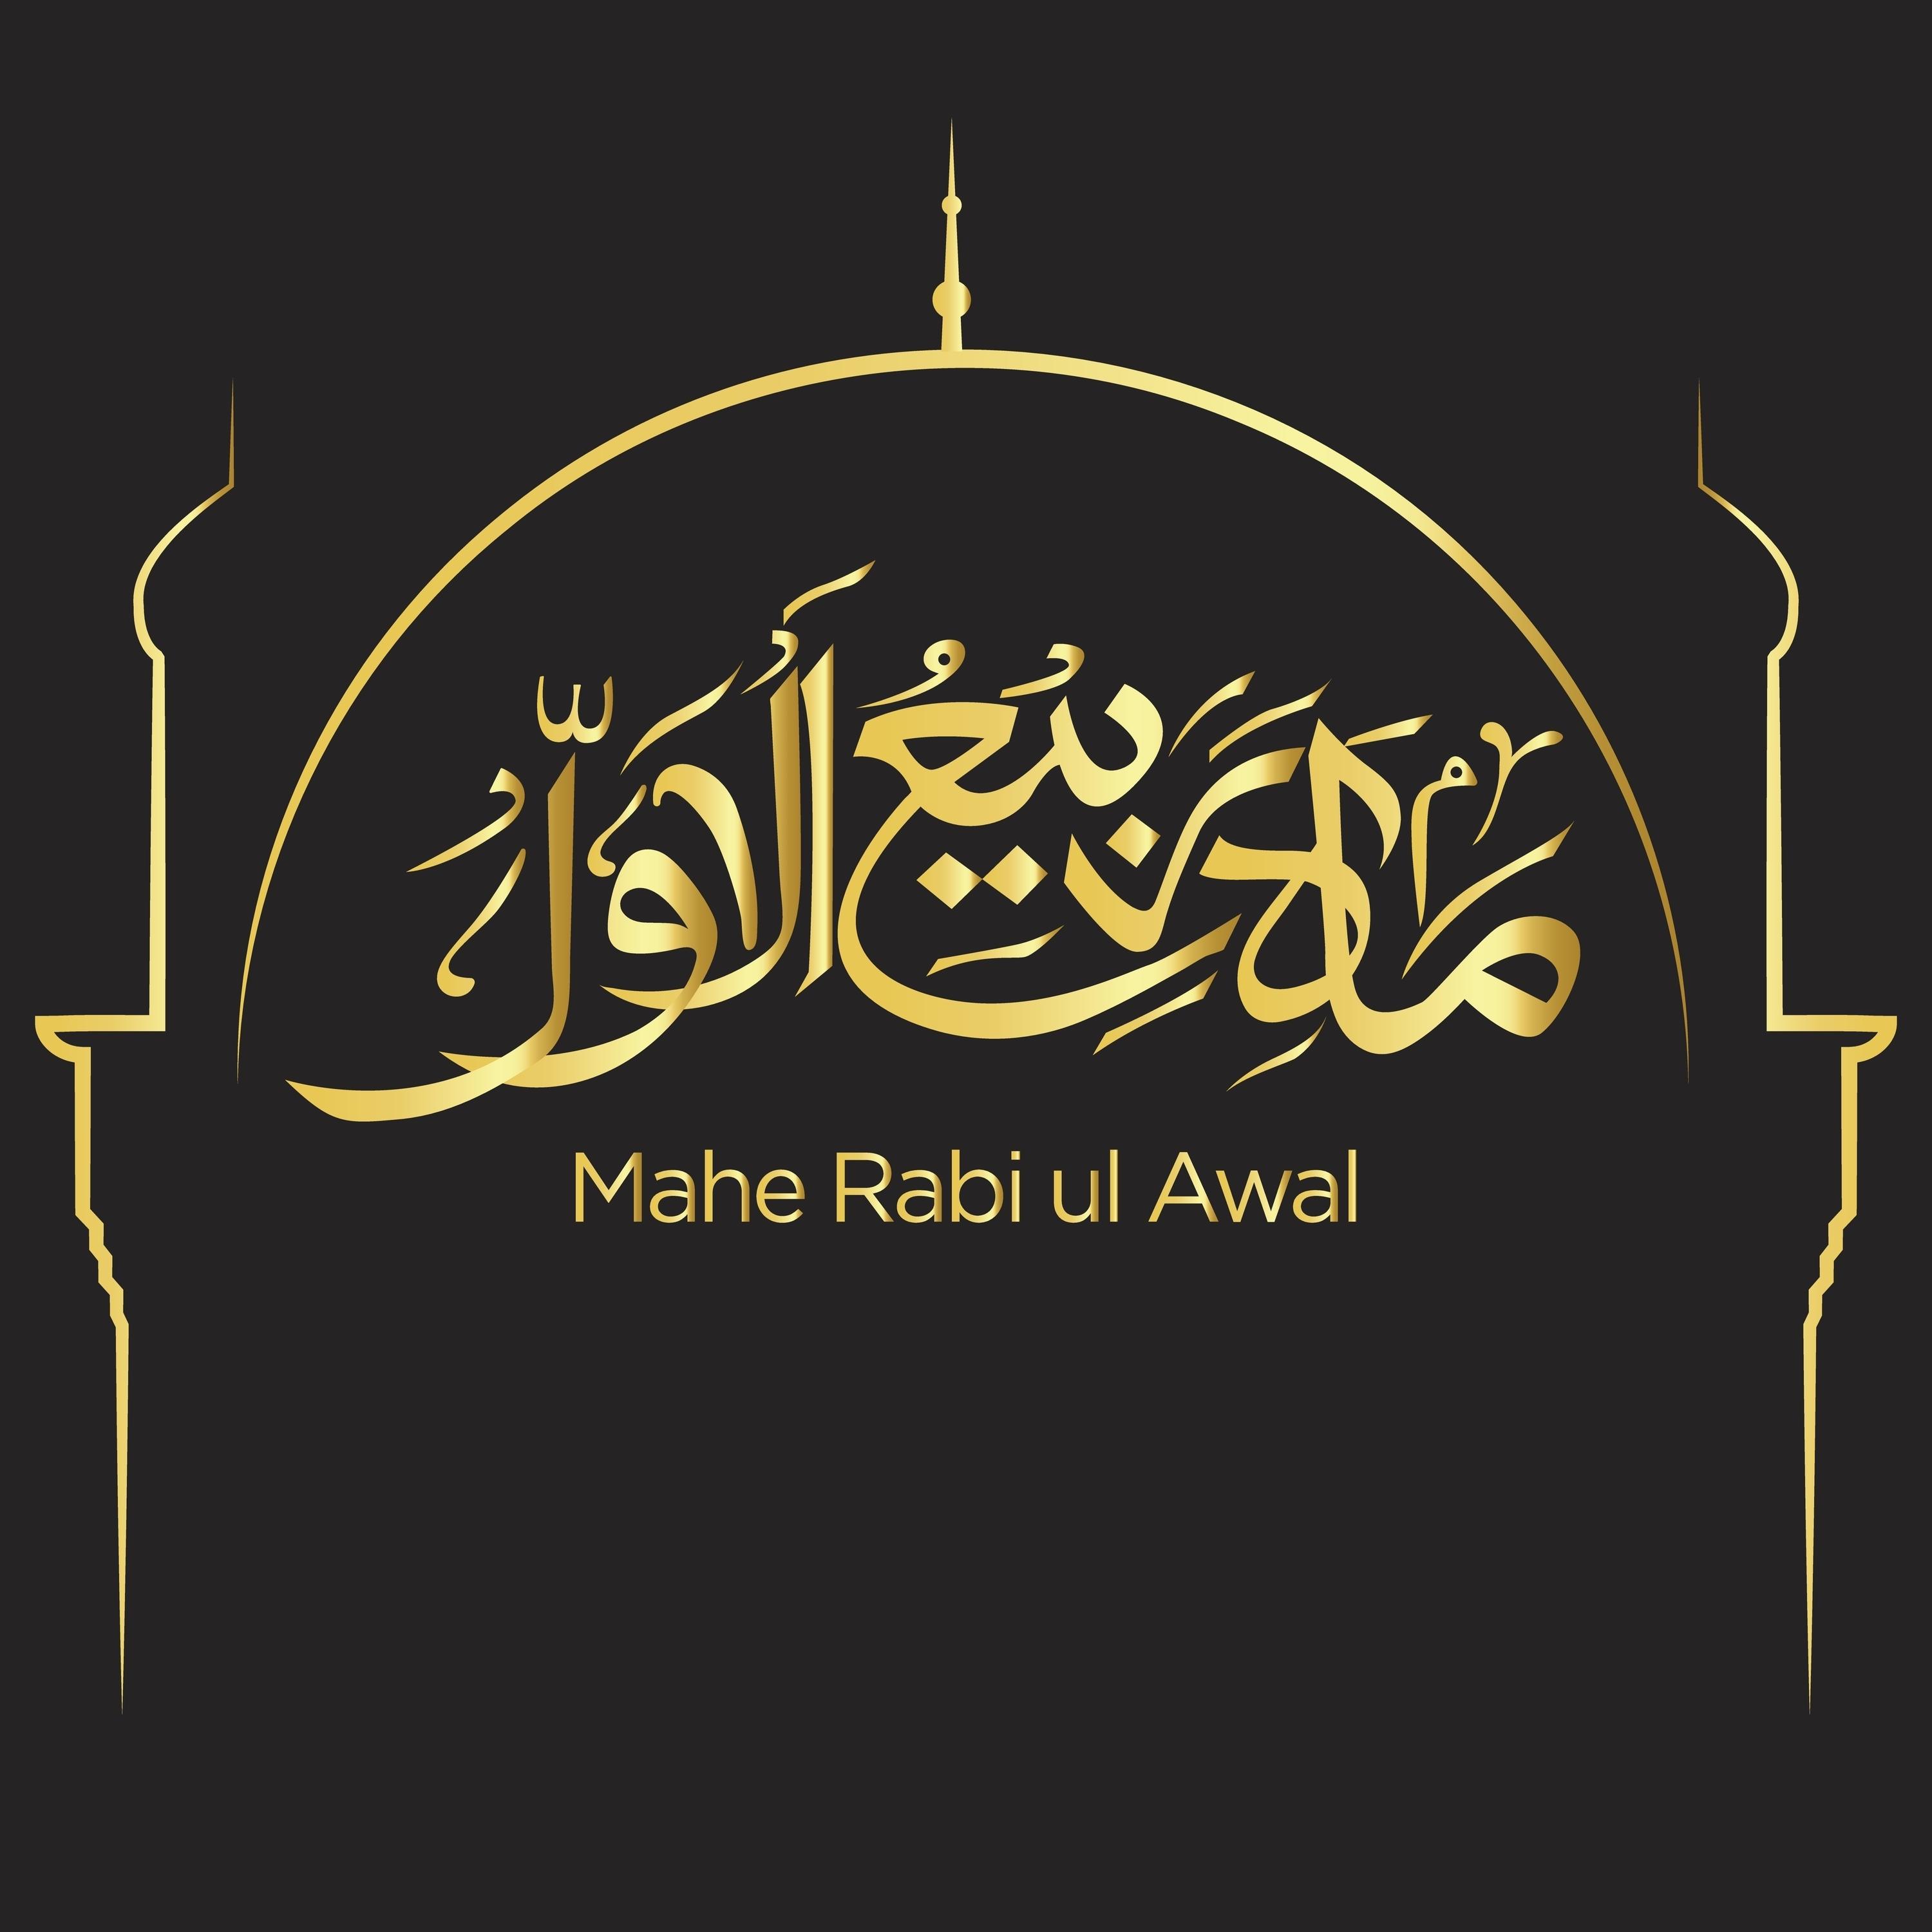 Rabi al-Awwal: Significance in the Islamic Calendar